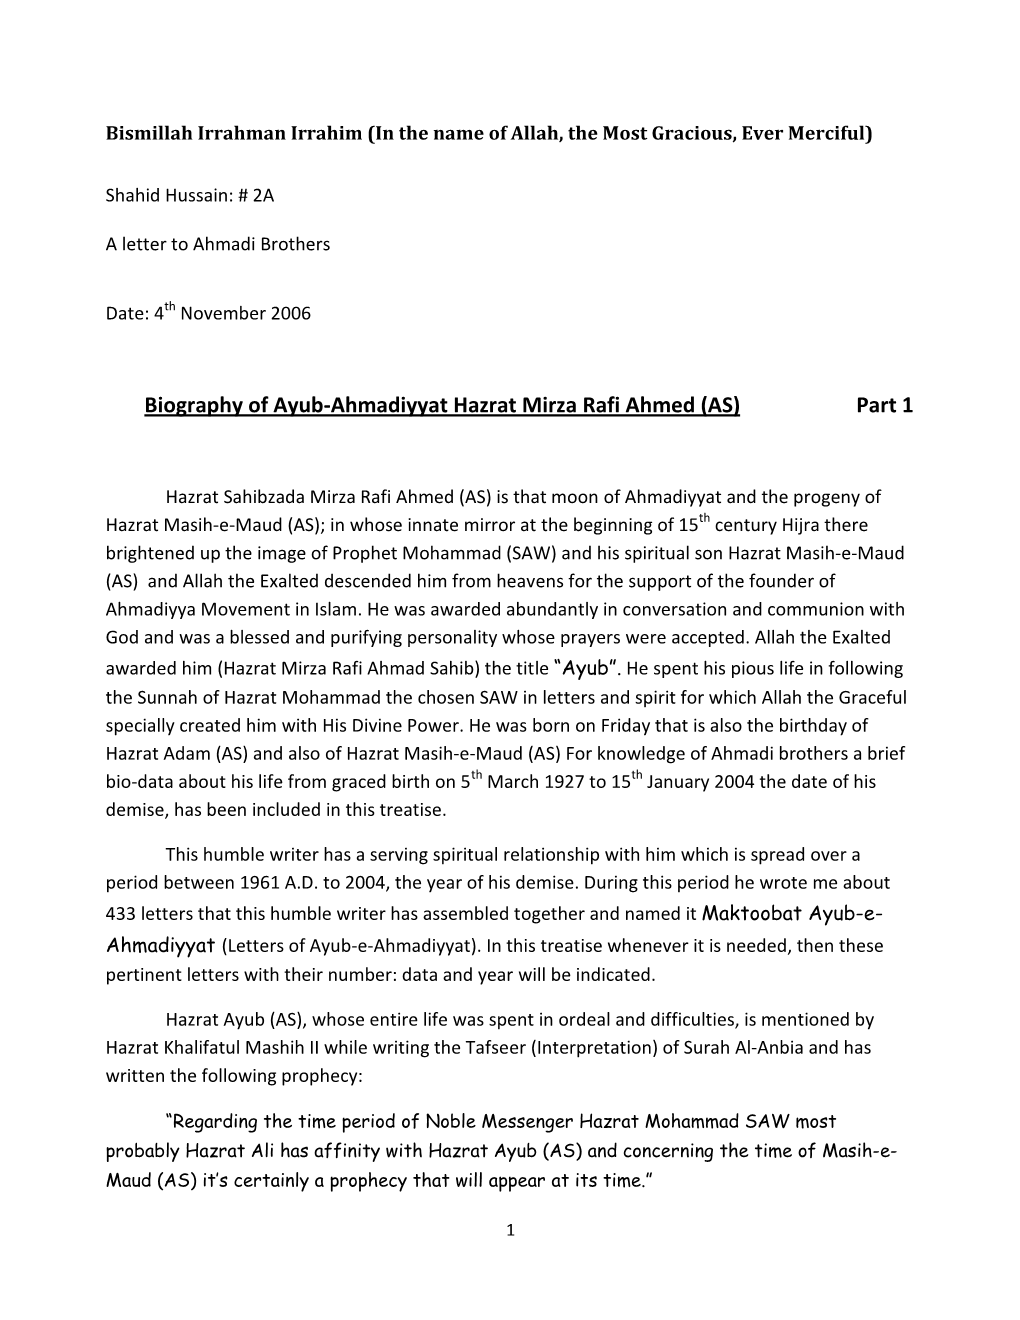 Biography of Ayub-Ahmadiyyat Hazrat Mirza Rafi Ahmed (AS) Part 1